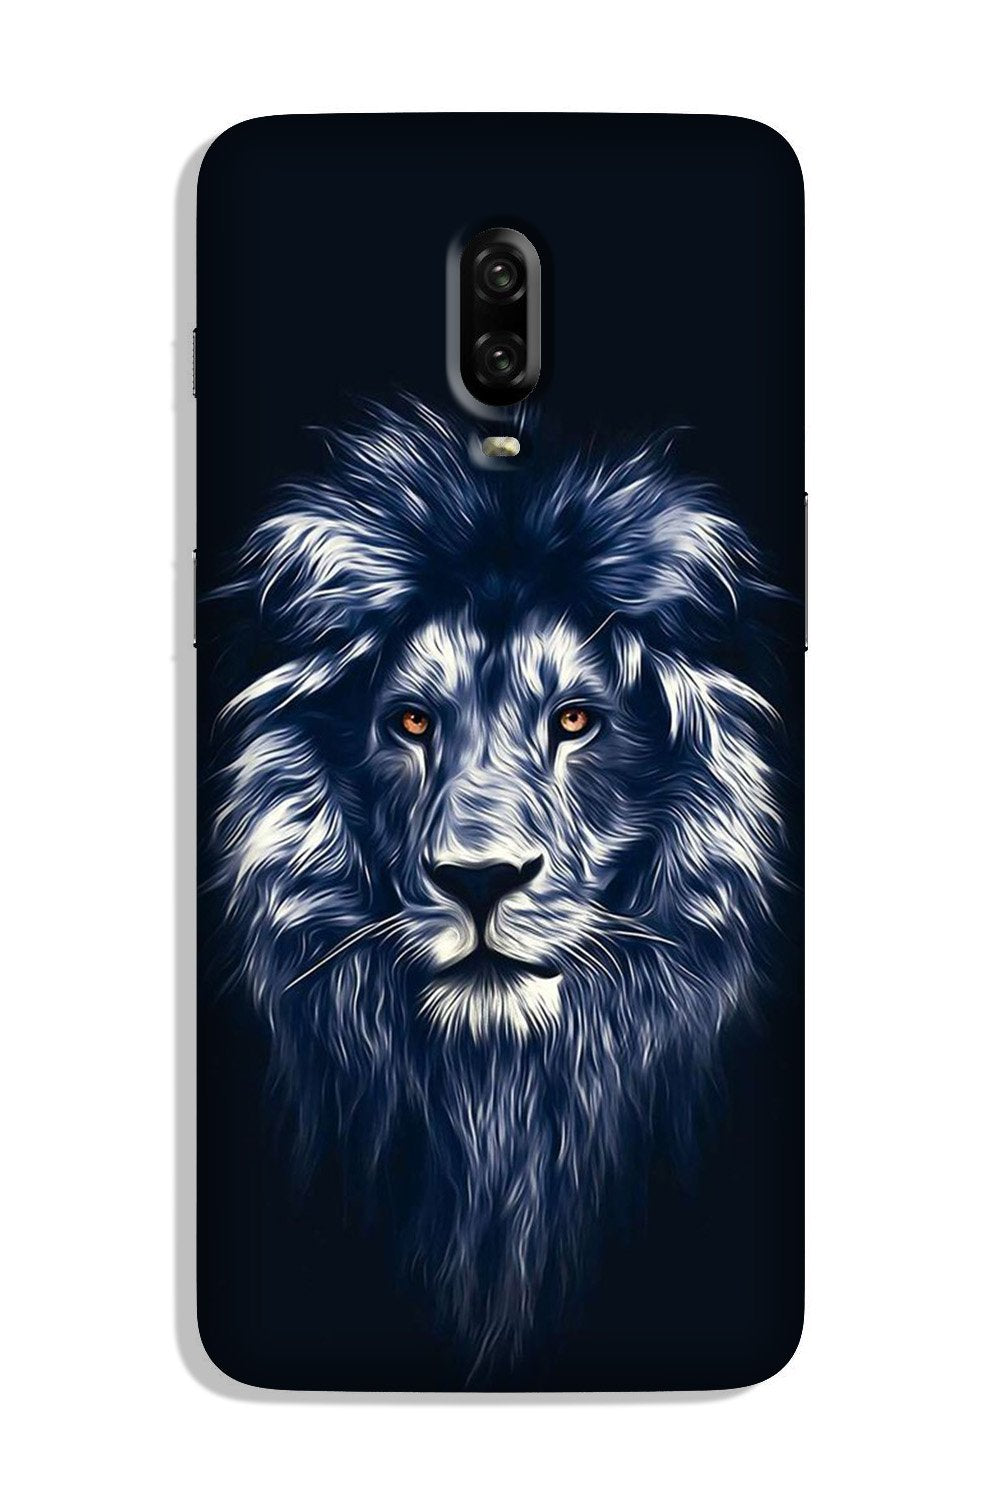 LionCase for OnePlus 6T (Design No. 281)